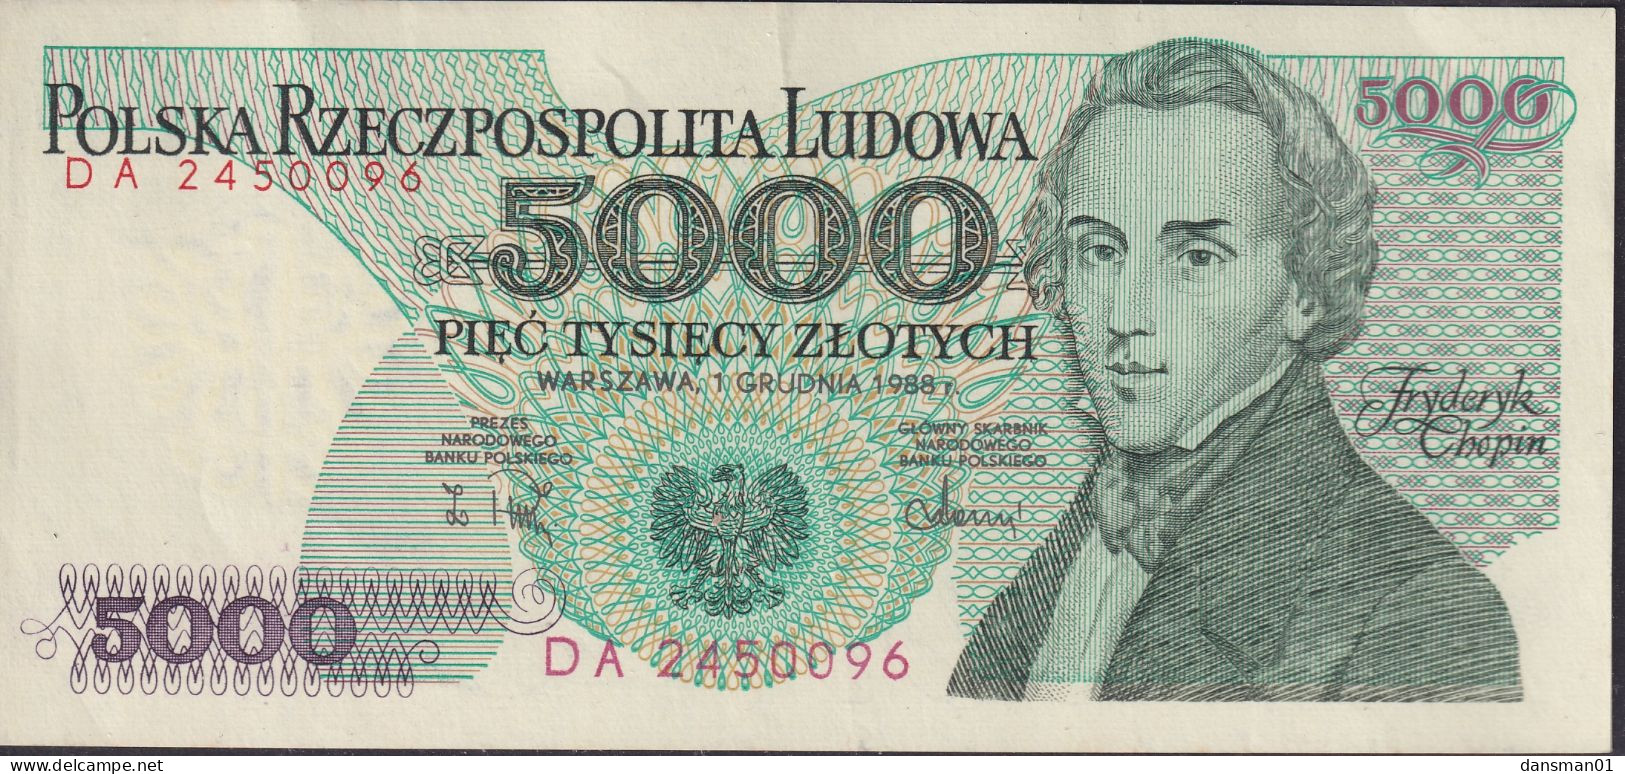 POLAND 1988 5000zl Banknote DA 2450096 Uncirculated - Pologne